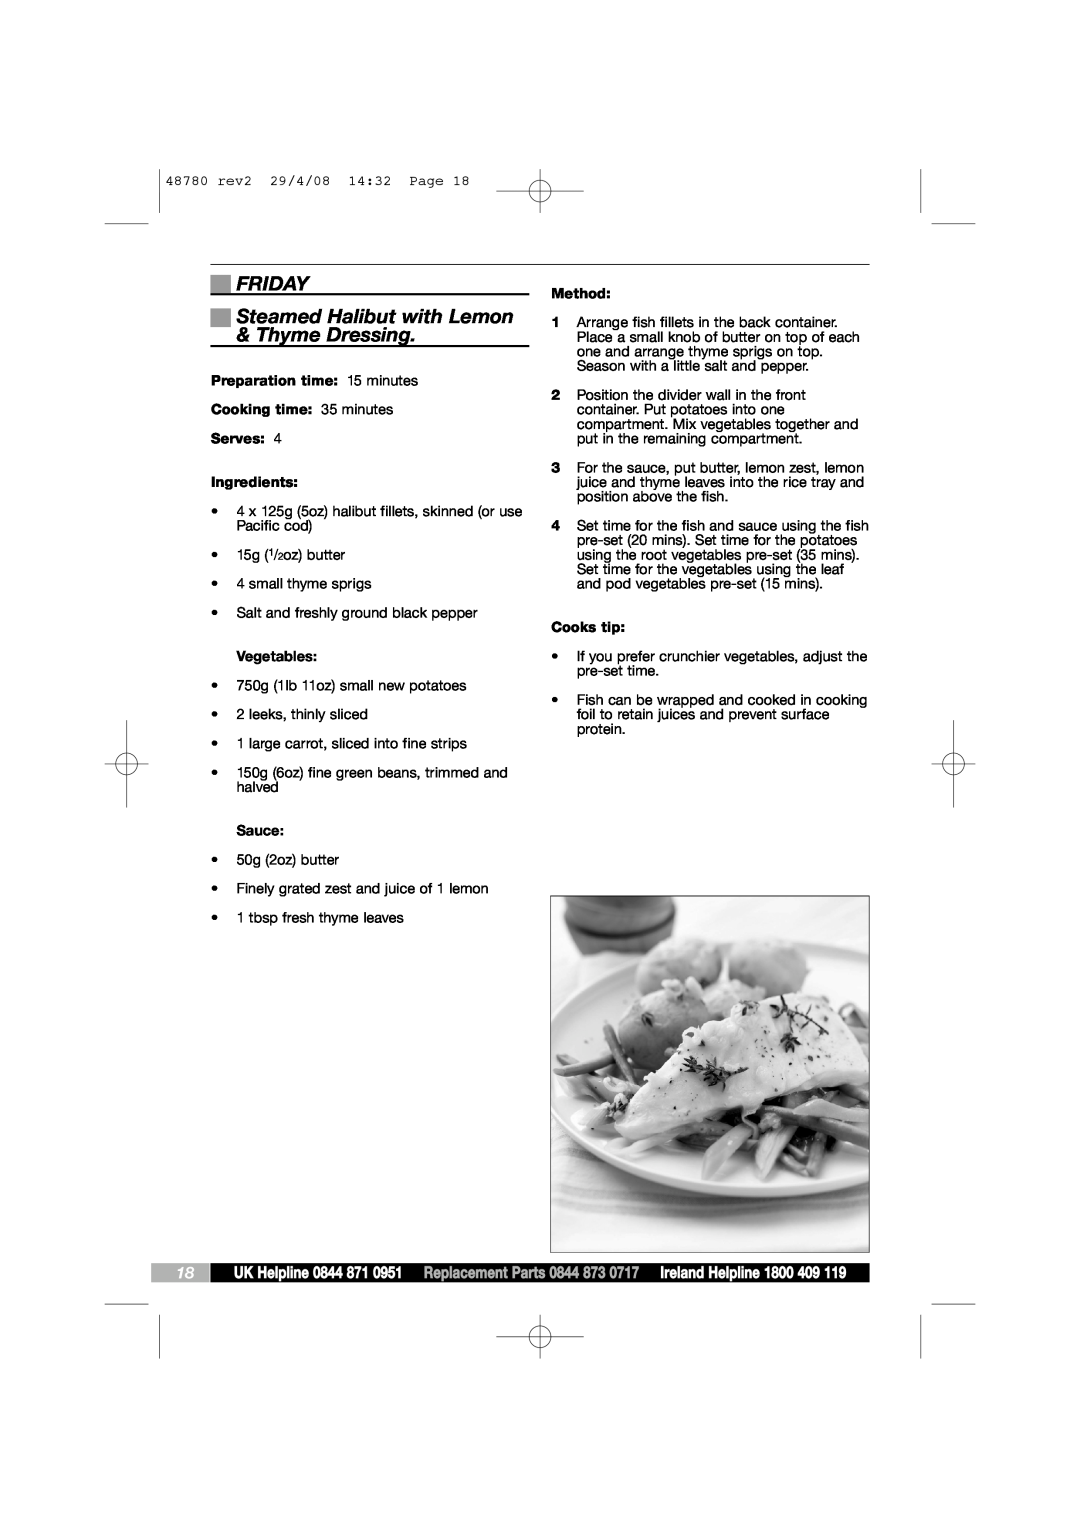 Morphy Richards Intellisteam setup guide FRIDAY Steamed Halibut with Lemon & Thyme Dressing, Vegetables, Sauce 